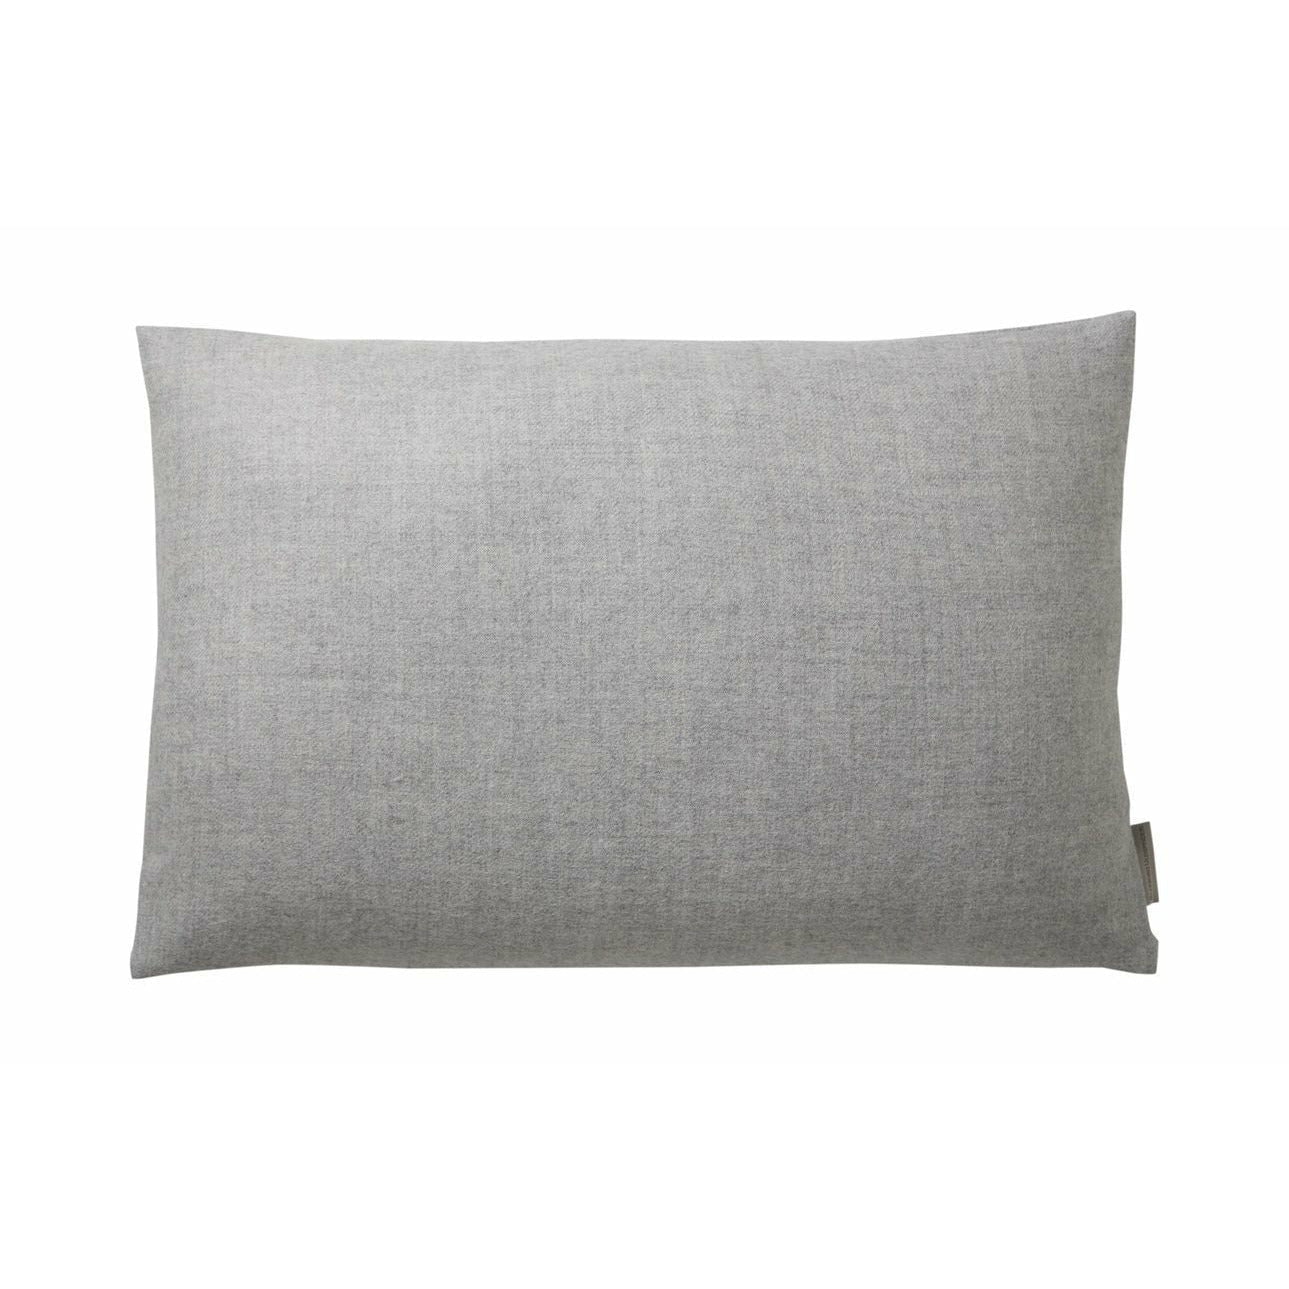 Silkorg Uldspinderi Arequipa Cushion 60 x40 cm, gris claro